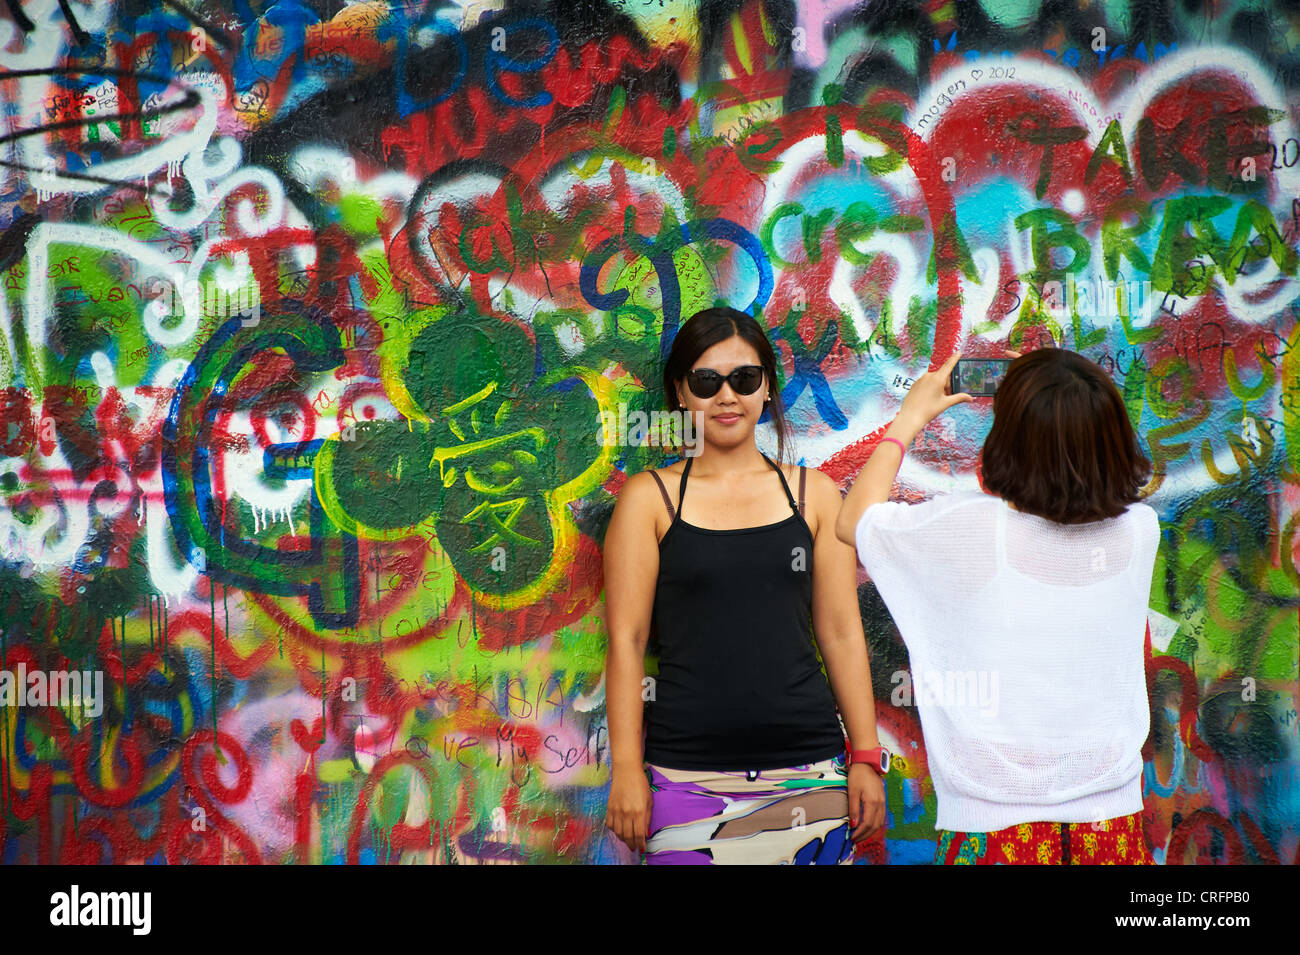 The John Lennon graffiti Wall in Prague, Czech Republic, tourist woman take a photo of  friend Stock Photo